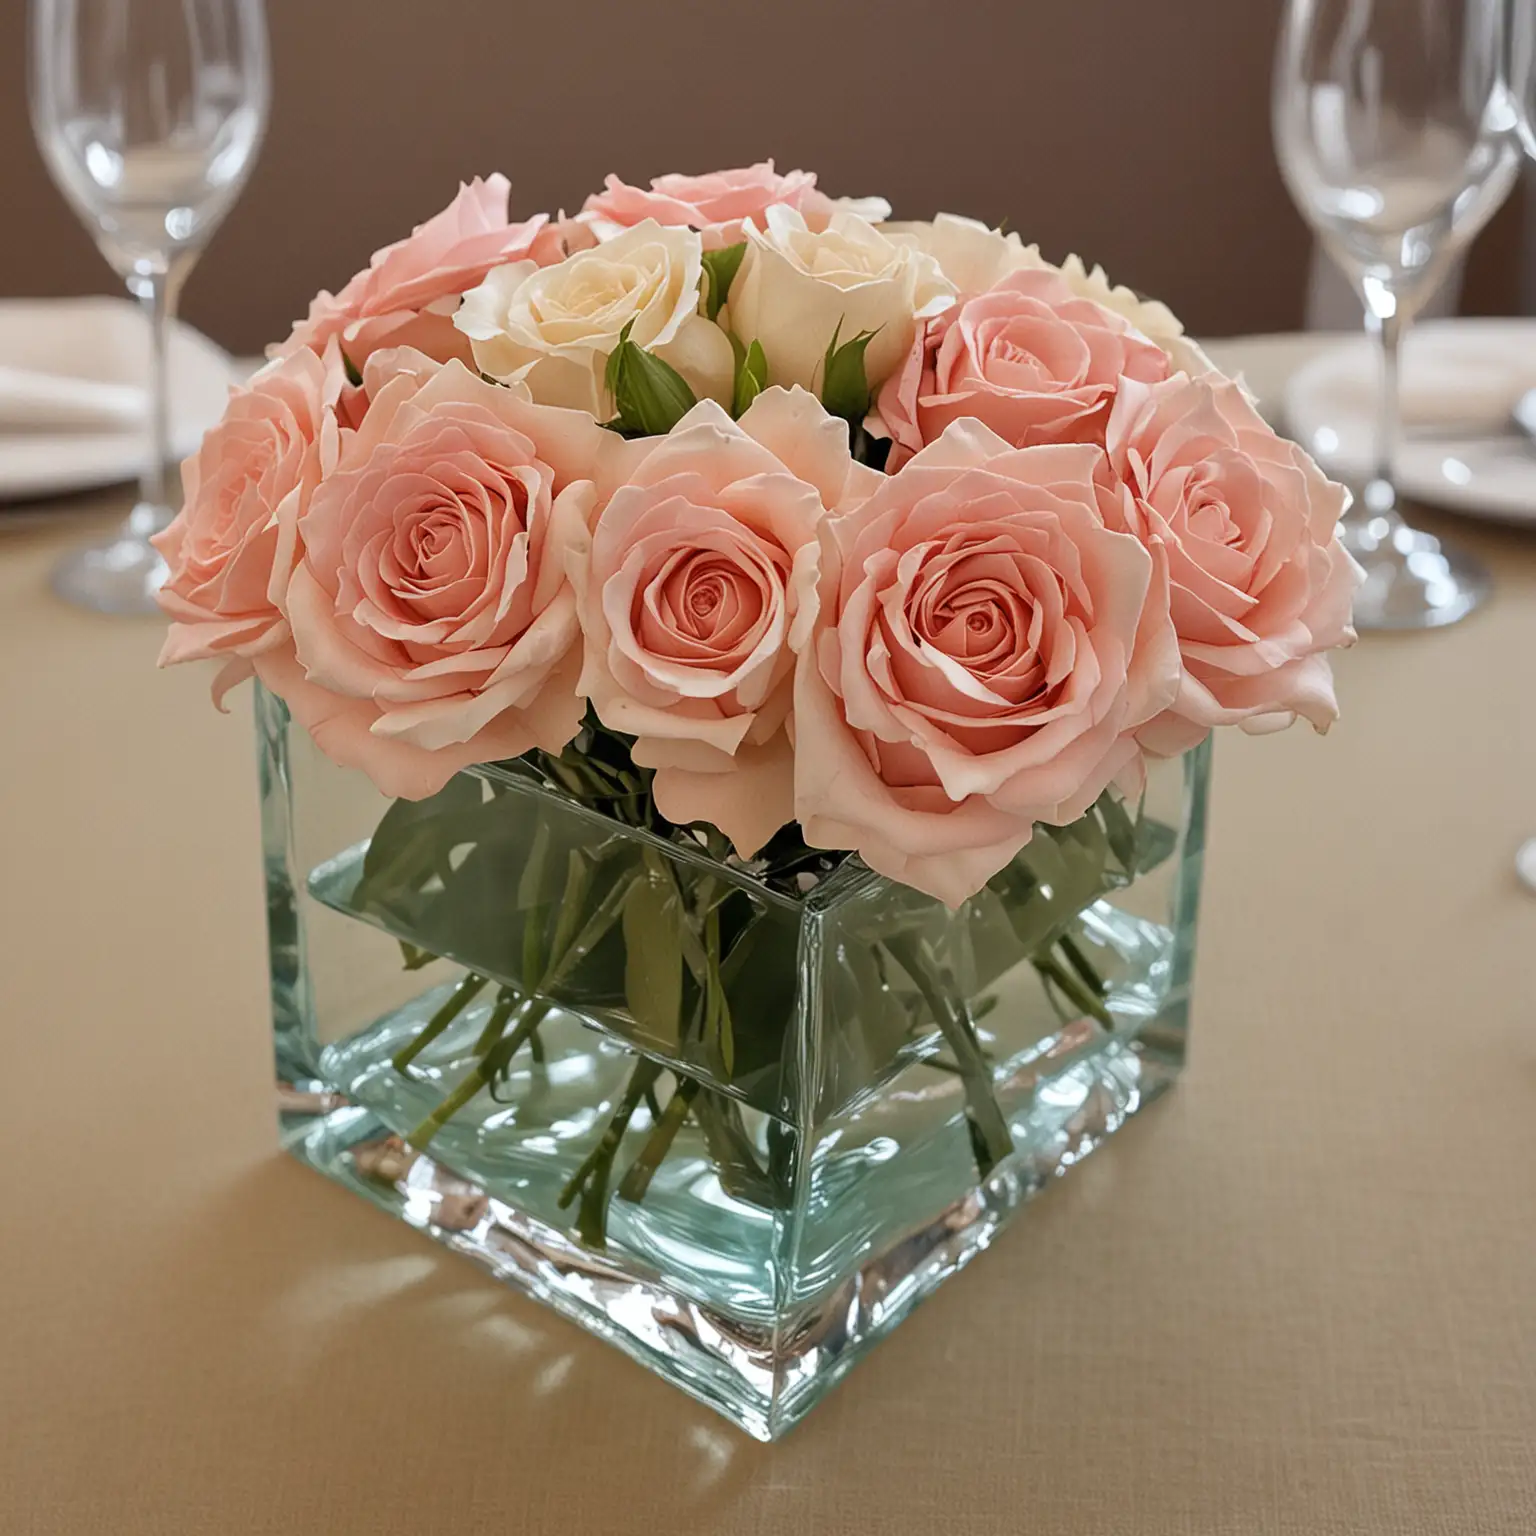 simple square glass vase wedding centerpiece easy DIY non-floral design